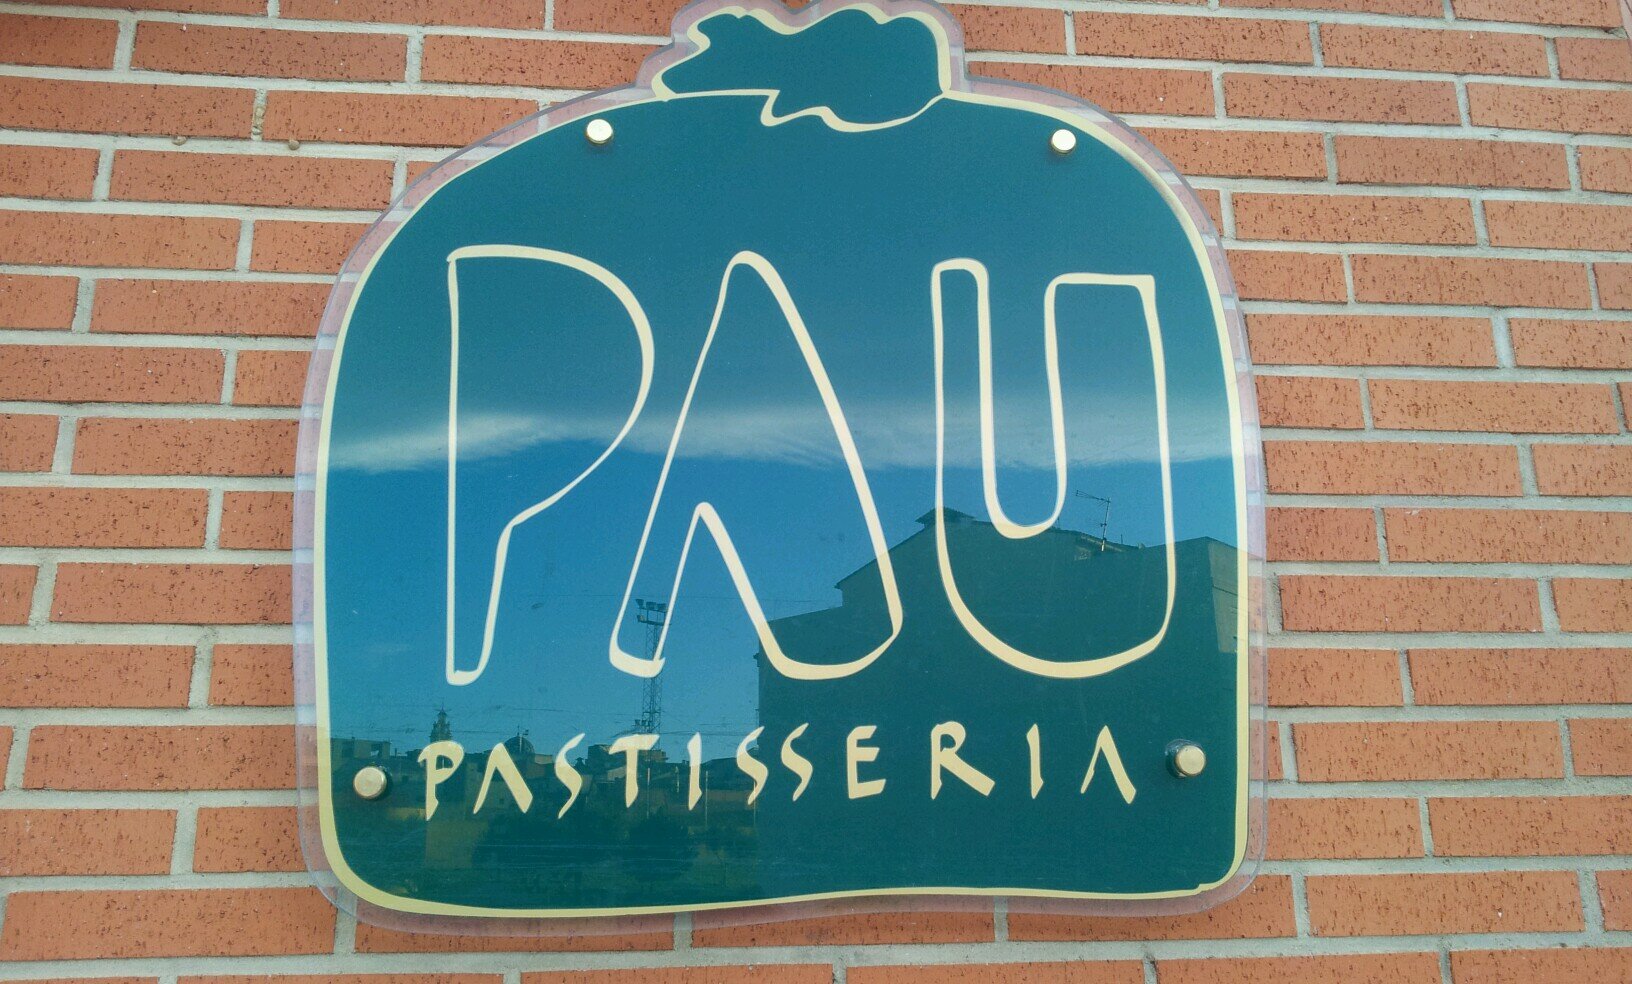 Jefe de Pastisseria Pau y gerente de Pau&Events